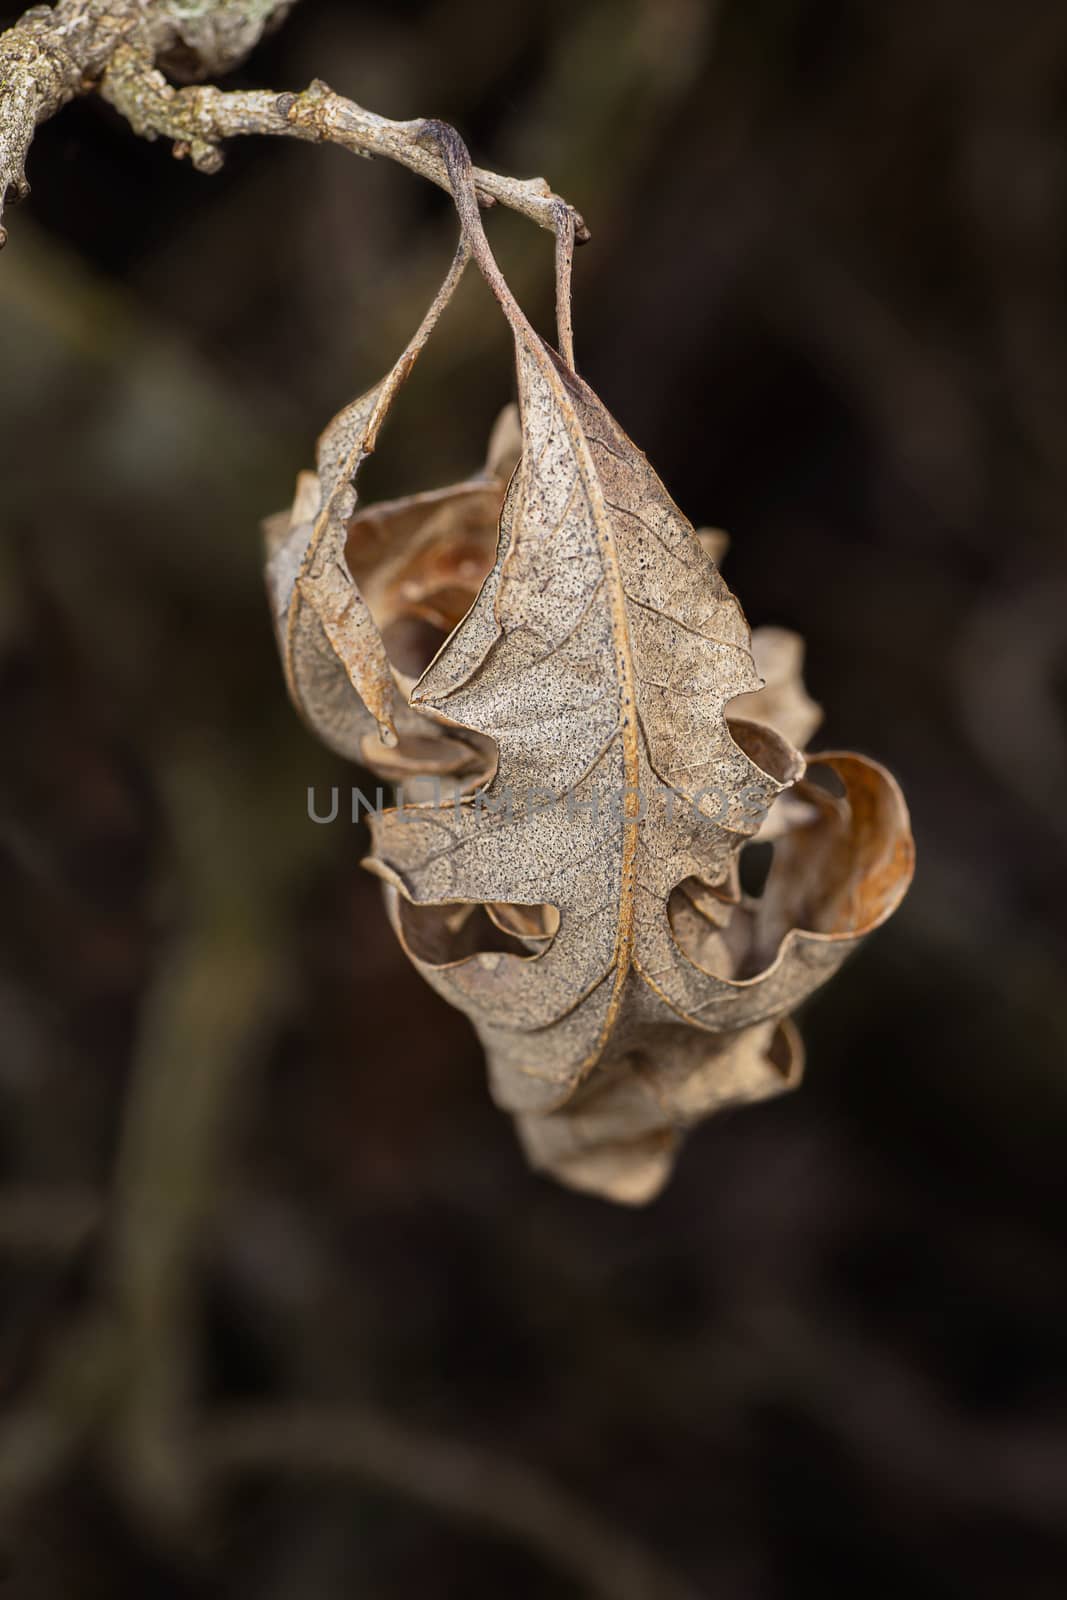 Dead leaf by mypstudio